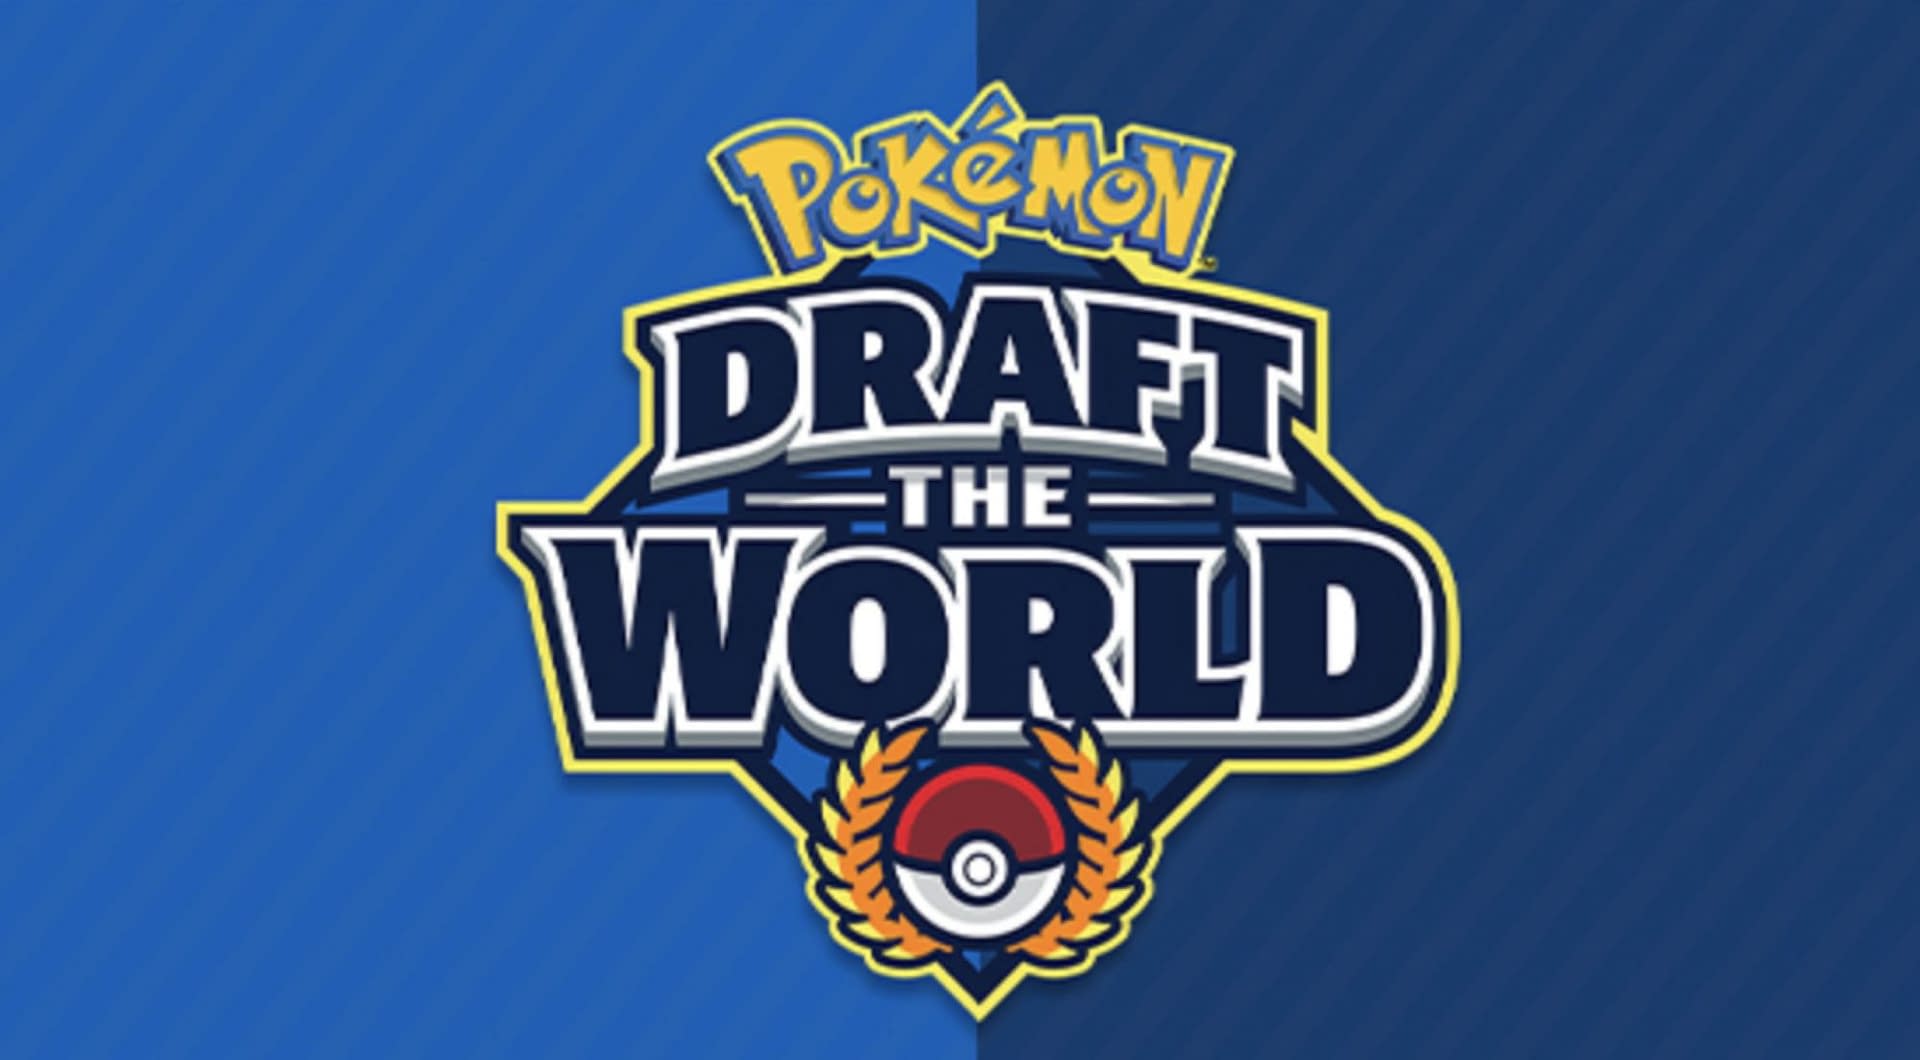 Pokemon 2019 World Championship Decks Announced 